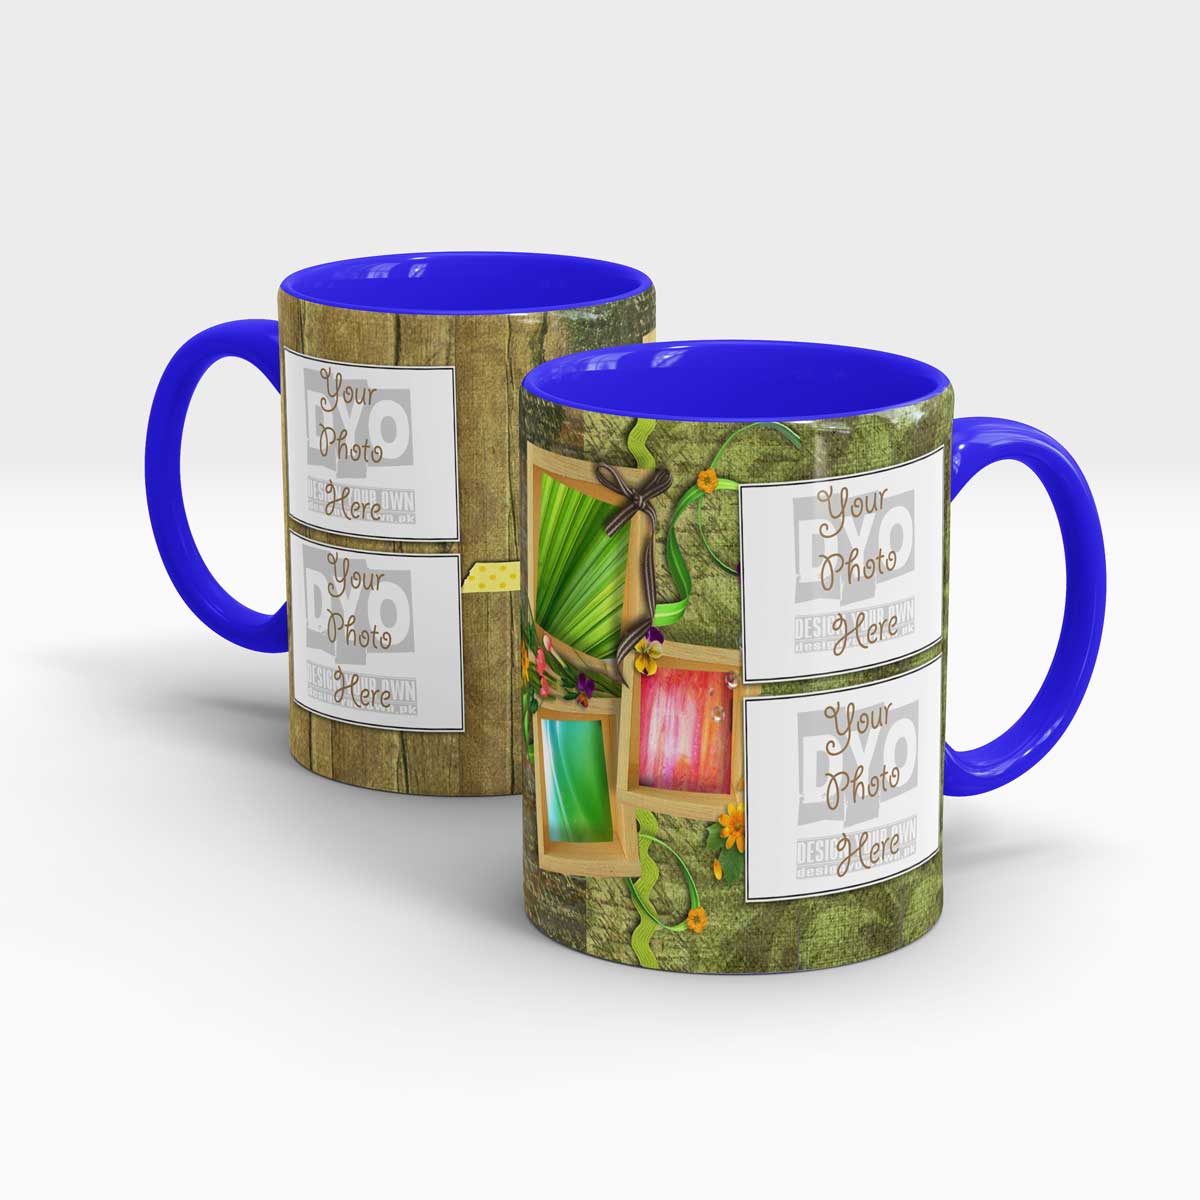 Custom Printed Coffee Mug For Coffee Lovers Design Your Own Online